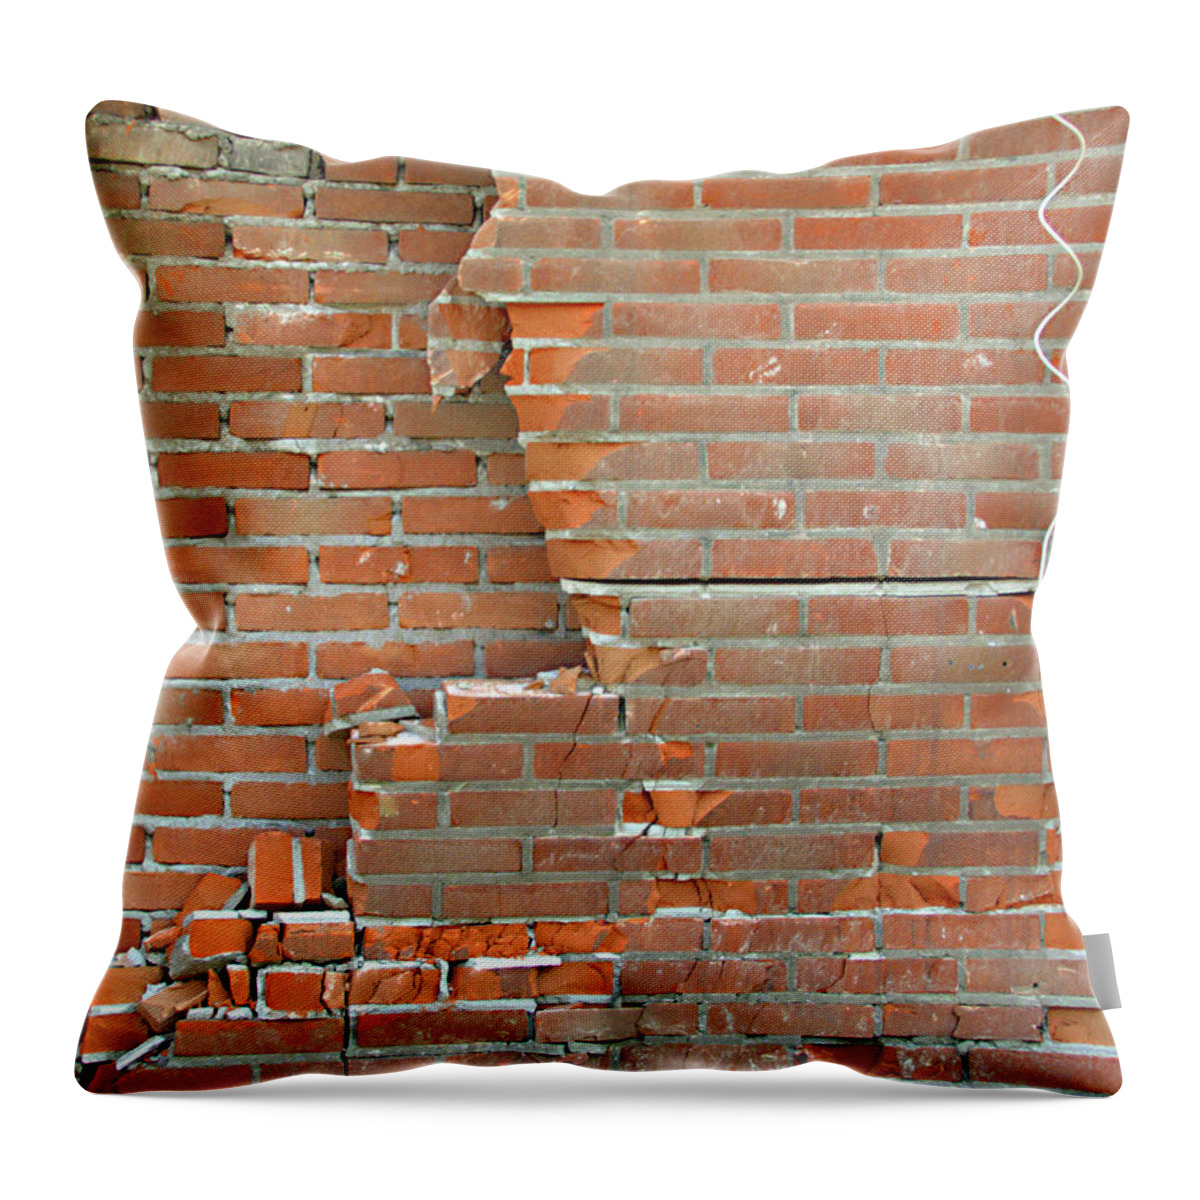 Digital Photography Throw Pillow featuring the photograph Home Improvement by Luc Van de Steeg